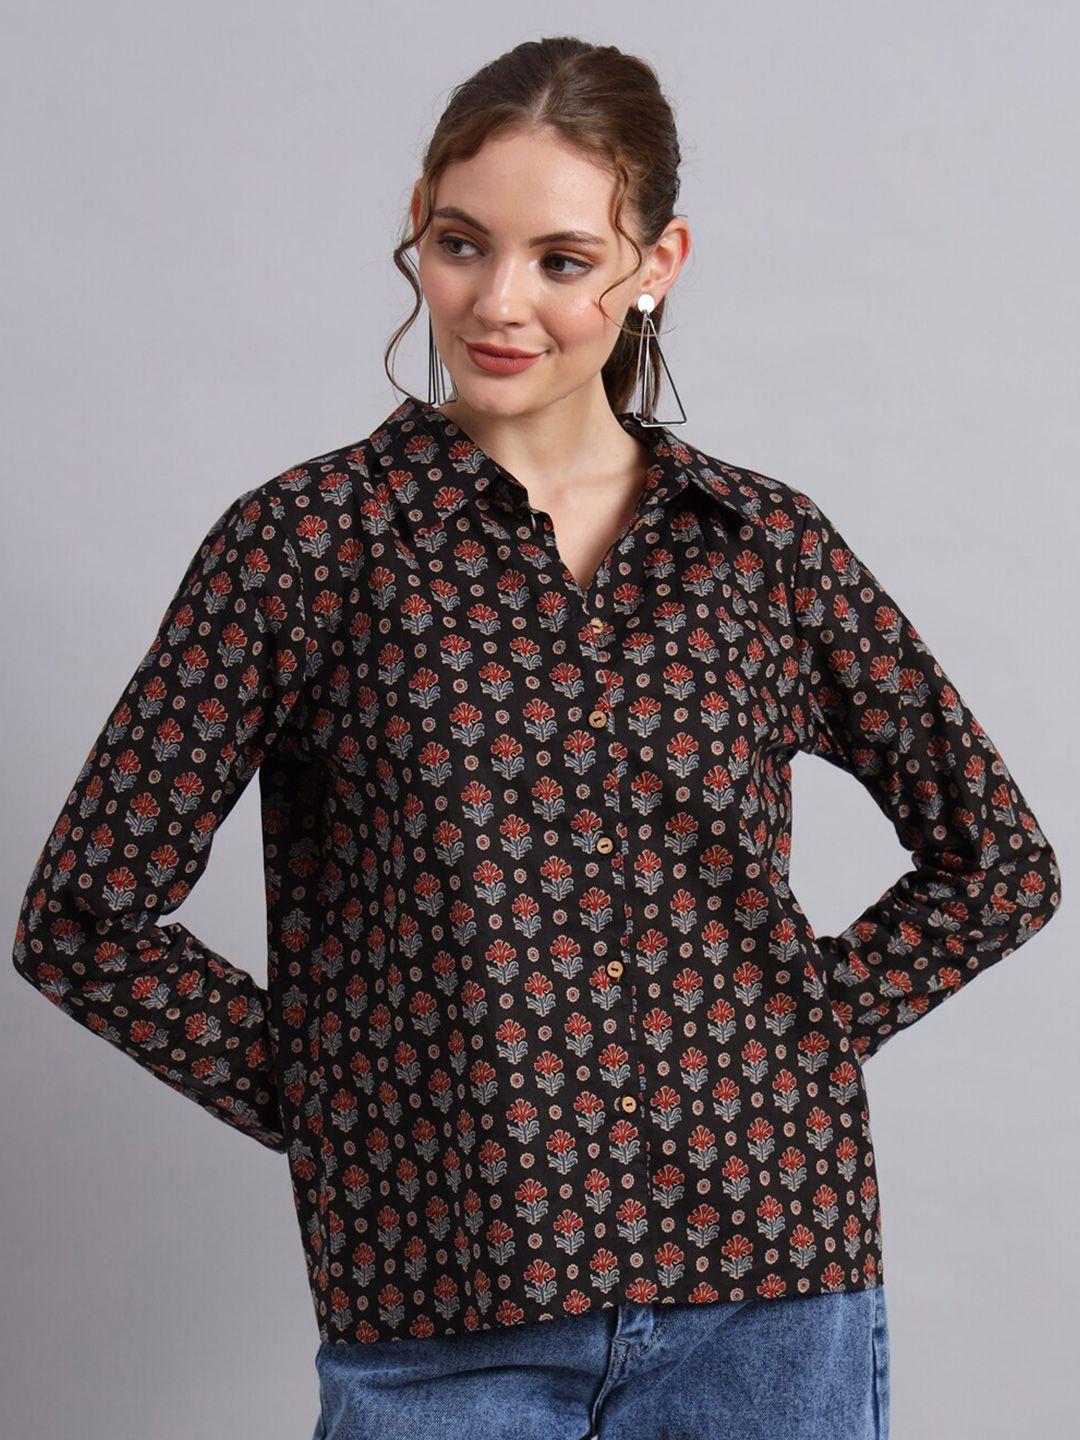 deckedup floral printed cotton shirt style top